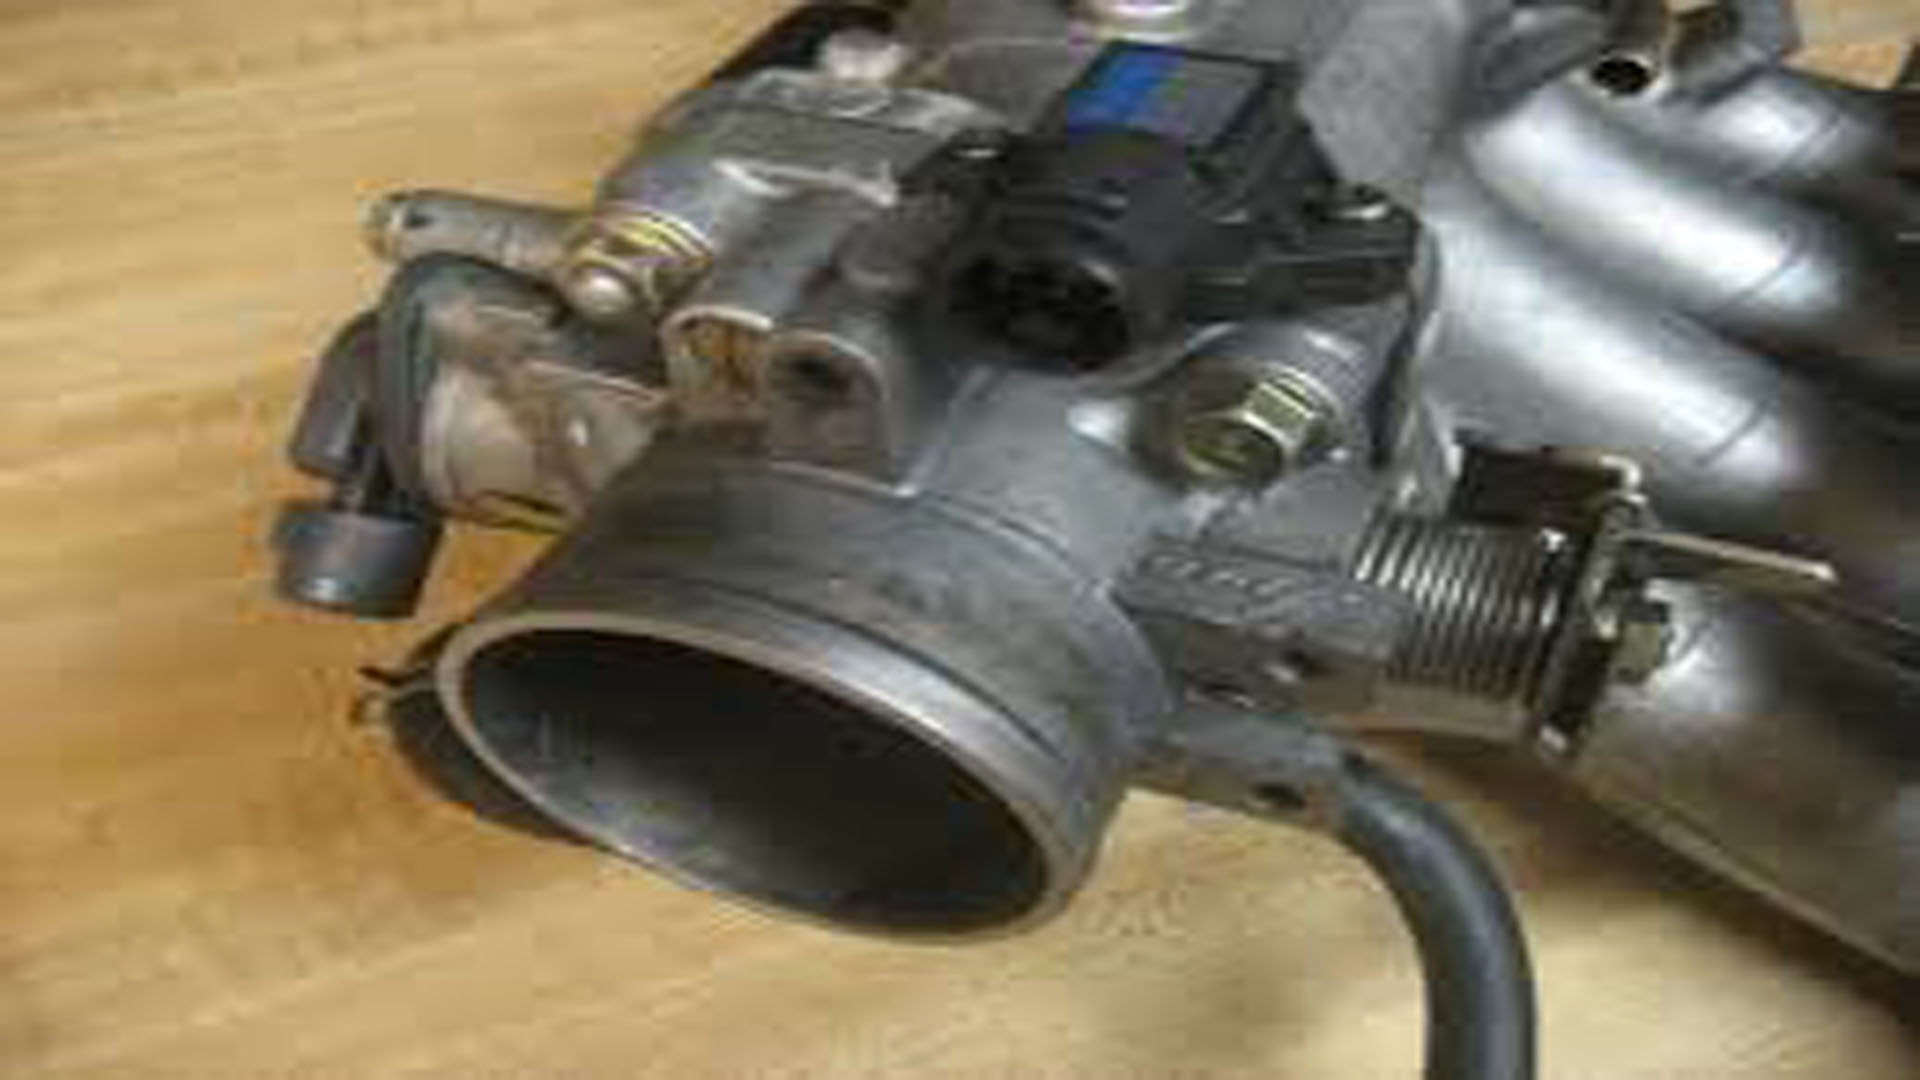 engine honda problem Honda CRV Engine Issues Fix Simplemost yasndsi